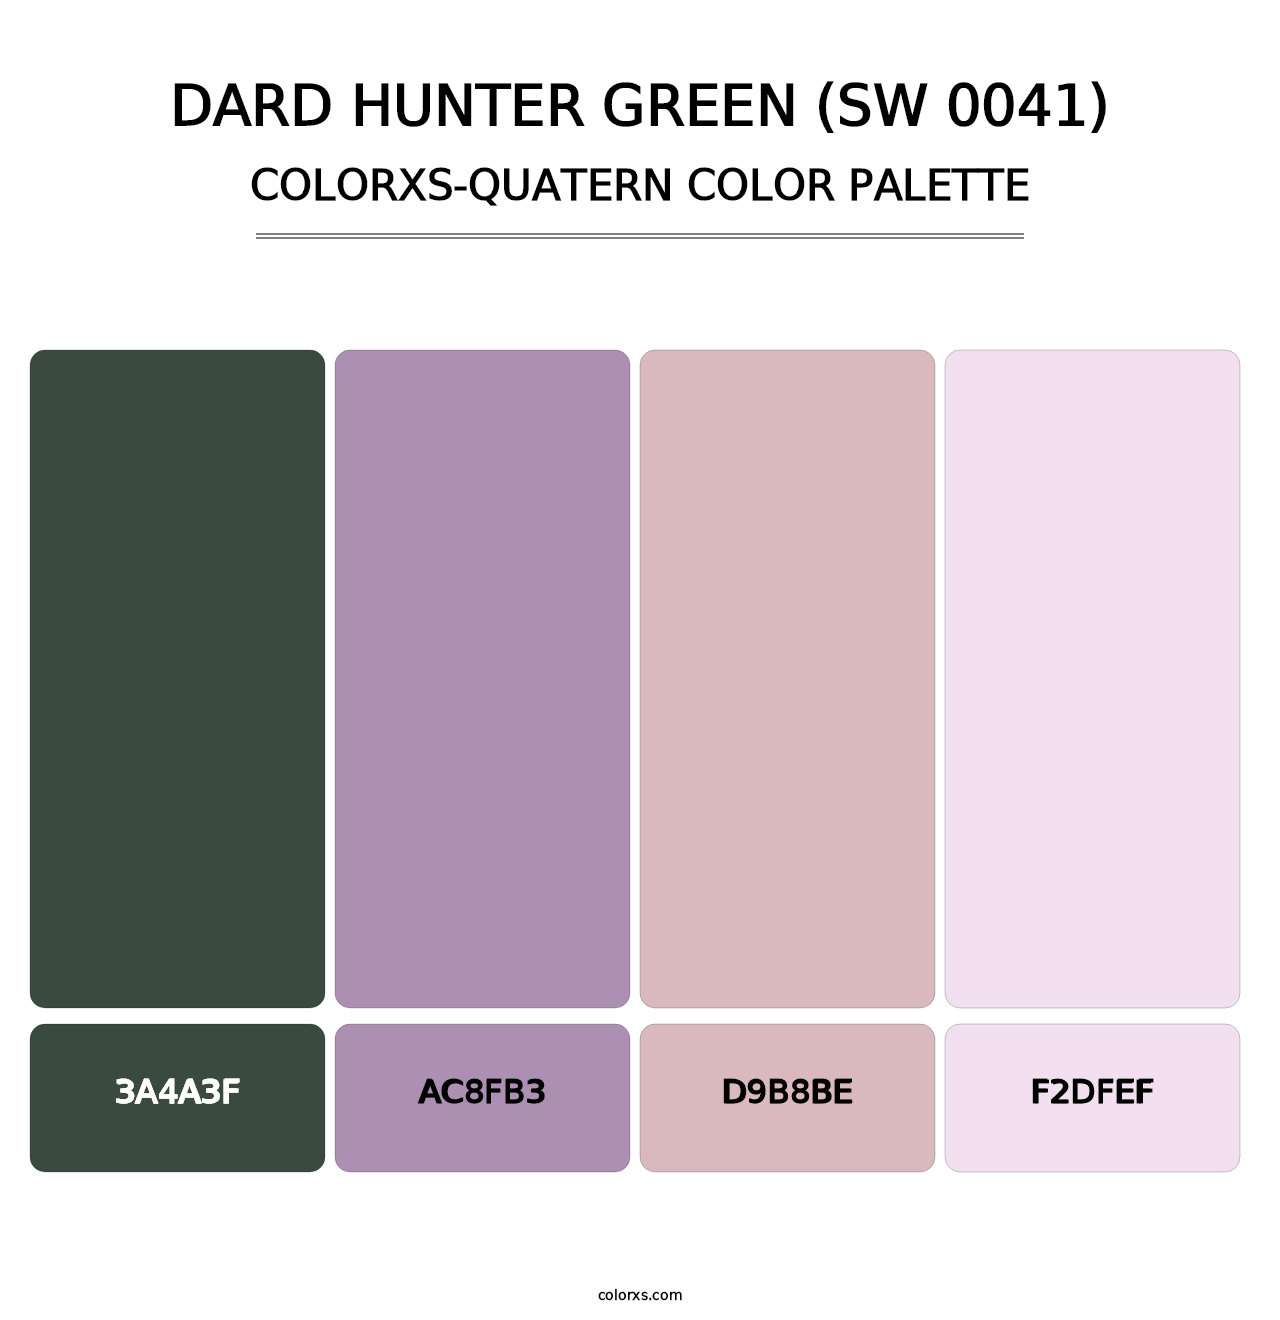 Dard Hunter Green (SW 0041) - Colorxs Quatern Palette